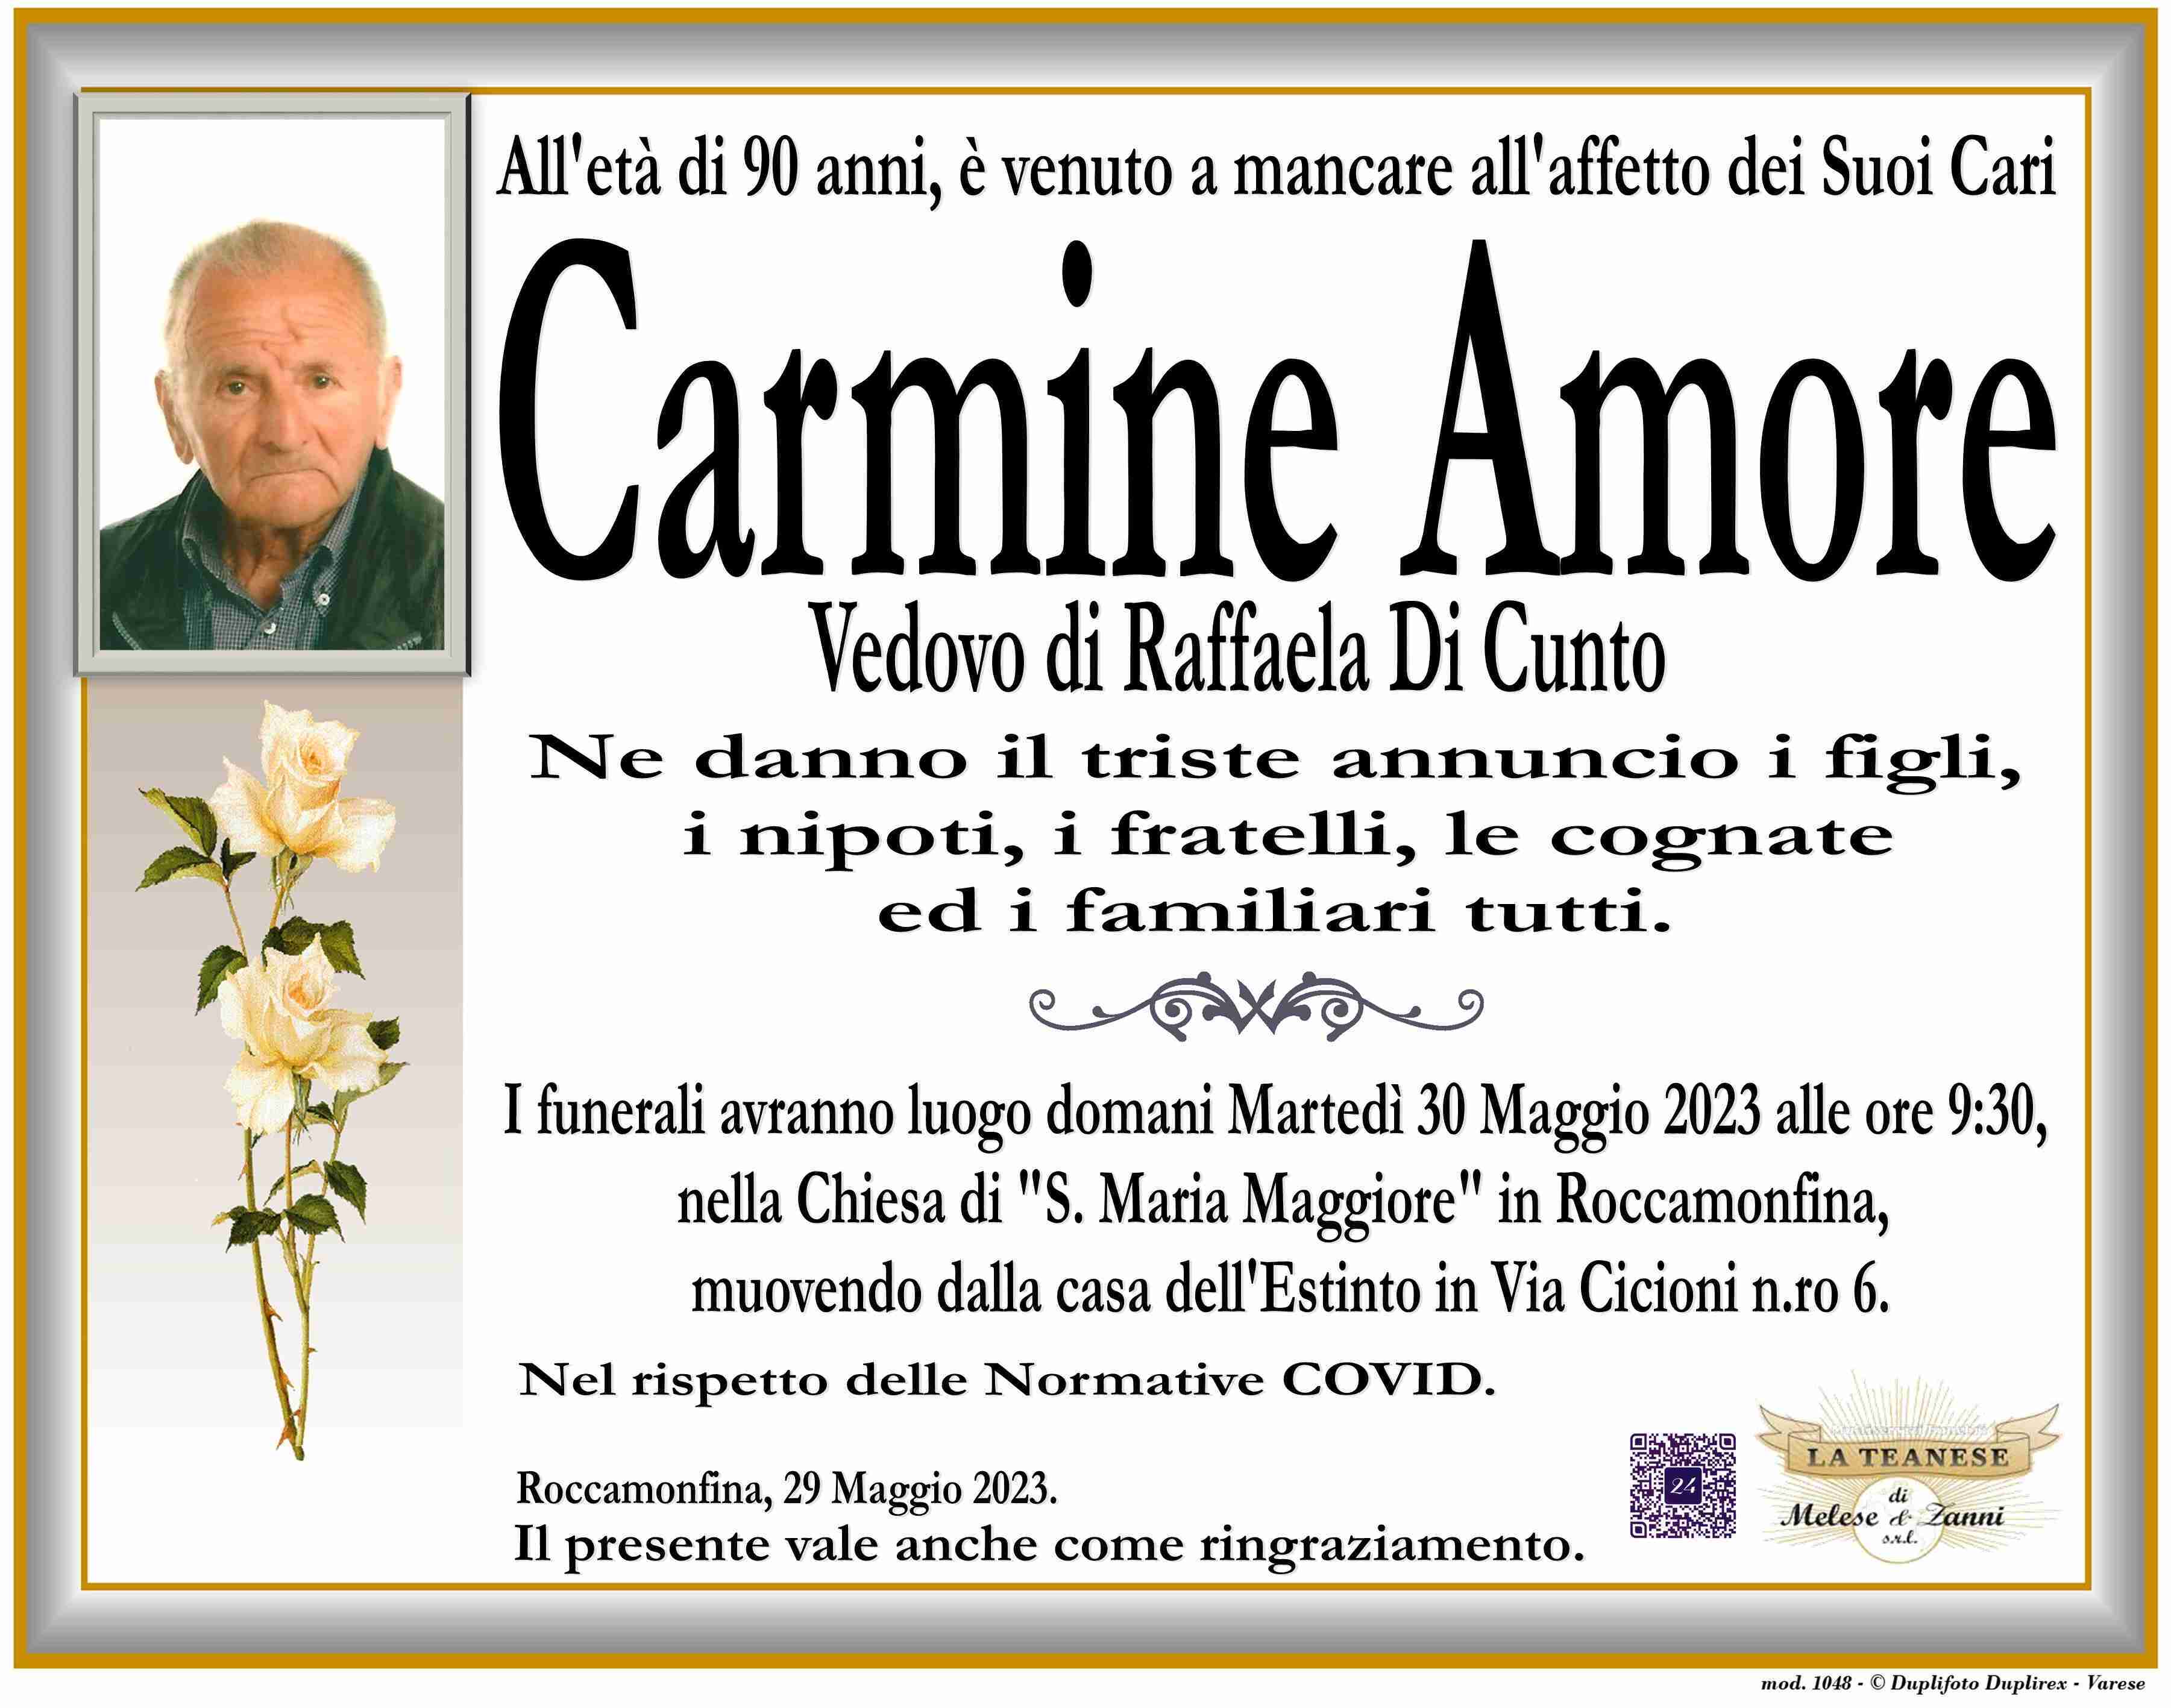 Carmine Amore